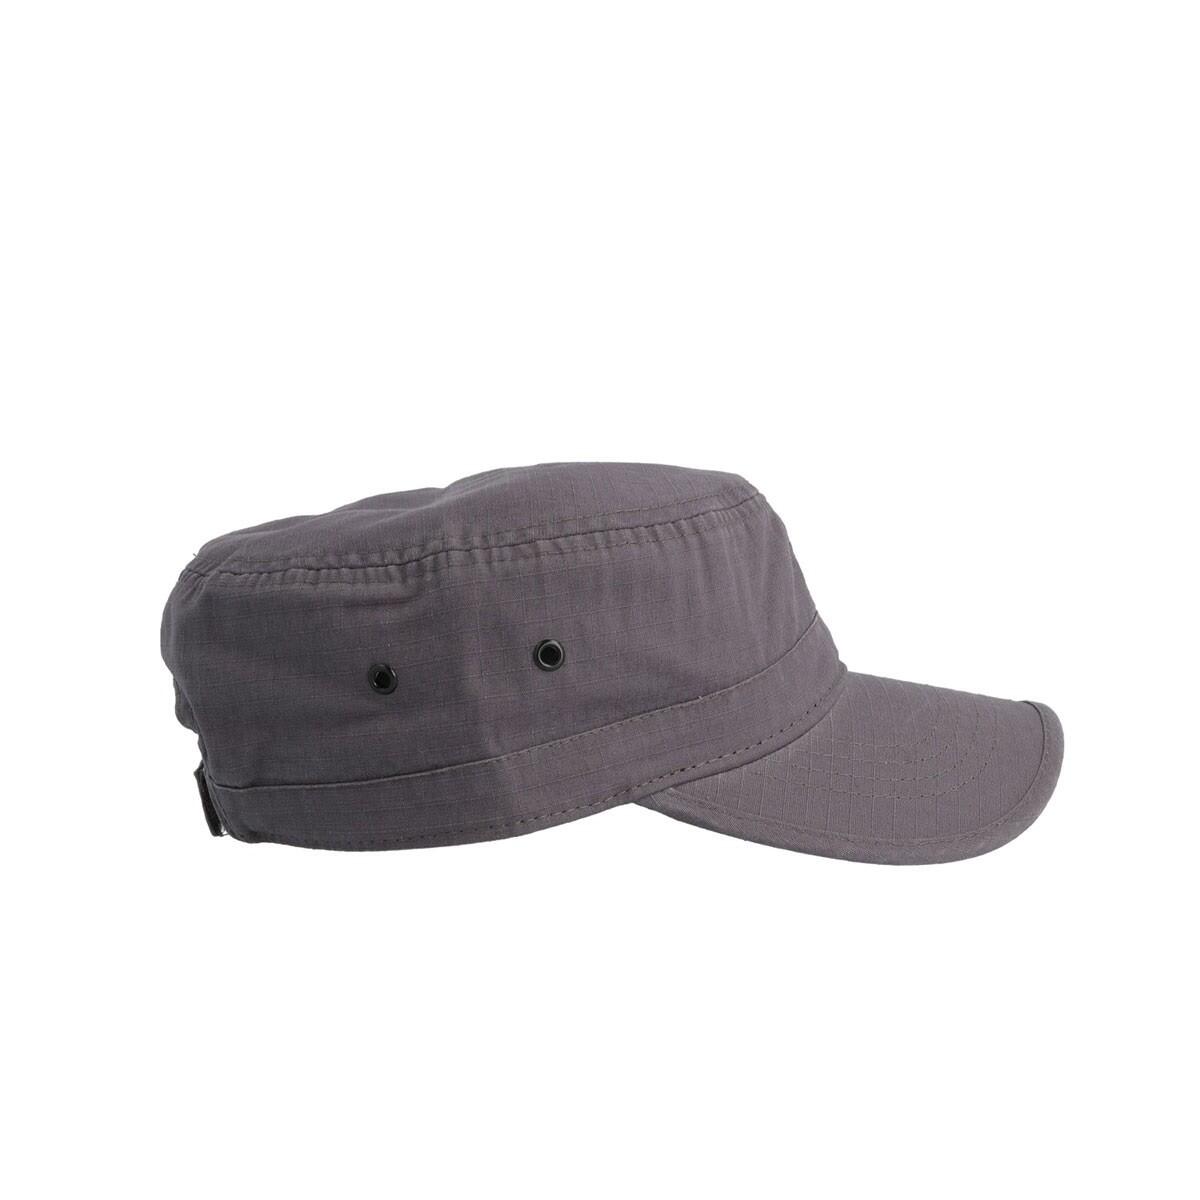 Army Military Cap (Grey) 4/4